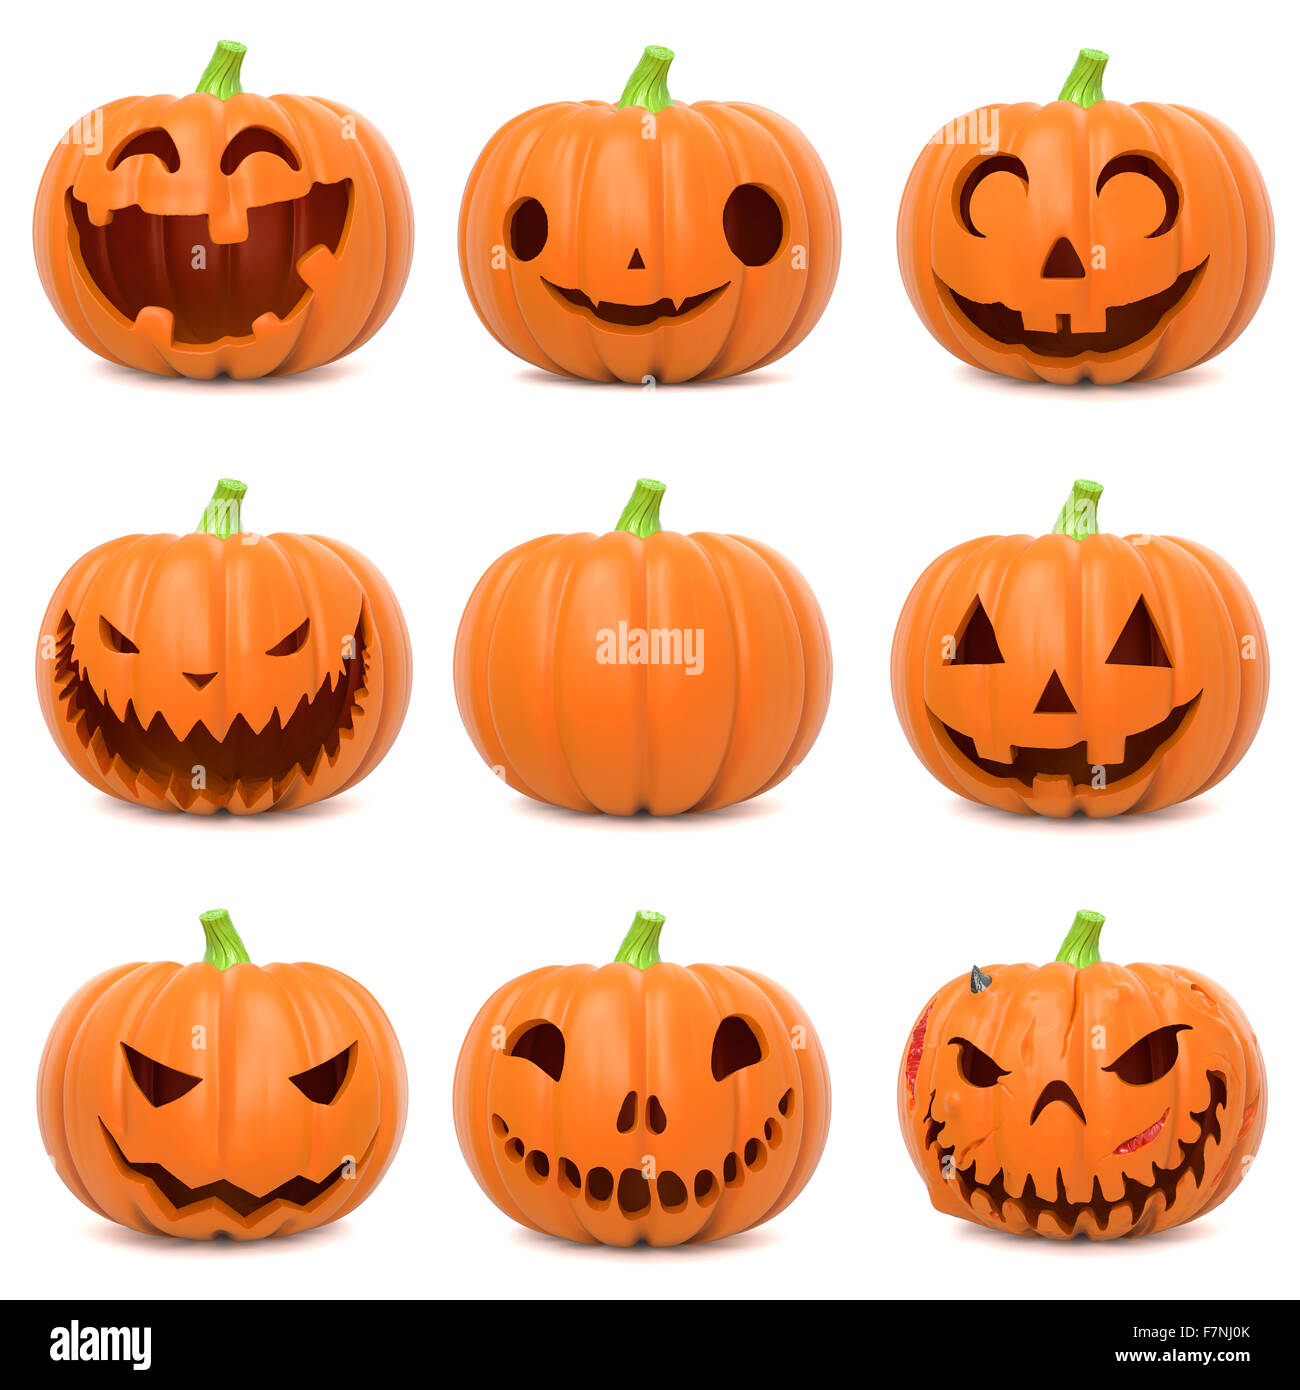 Funny Halloween pumpkins Stock Photo